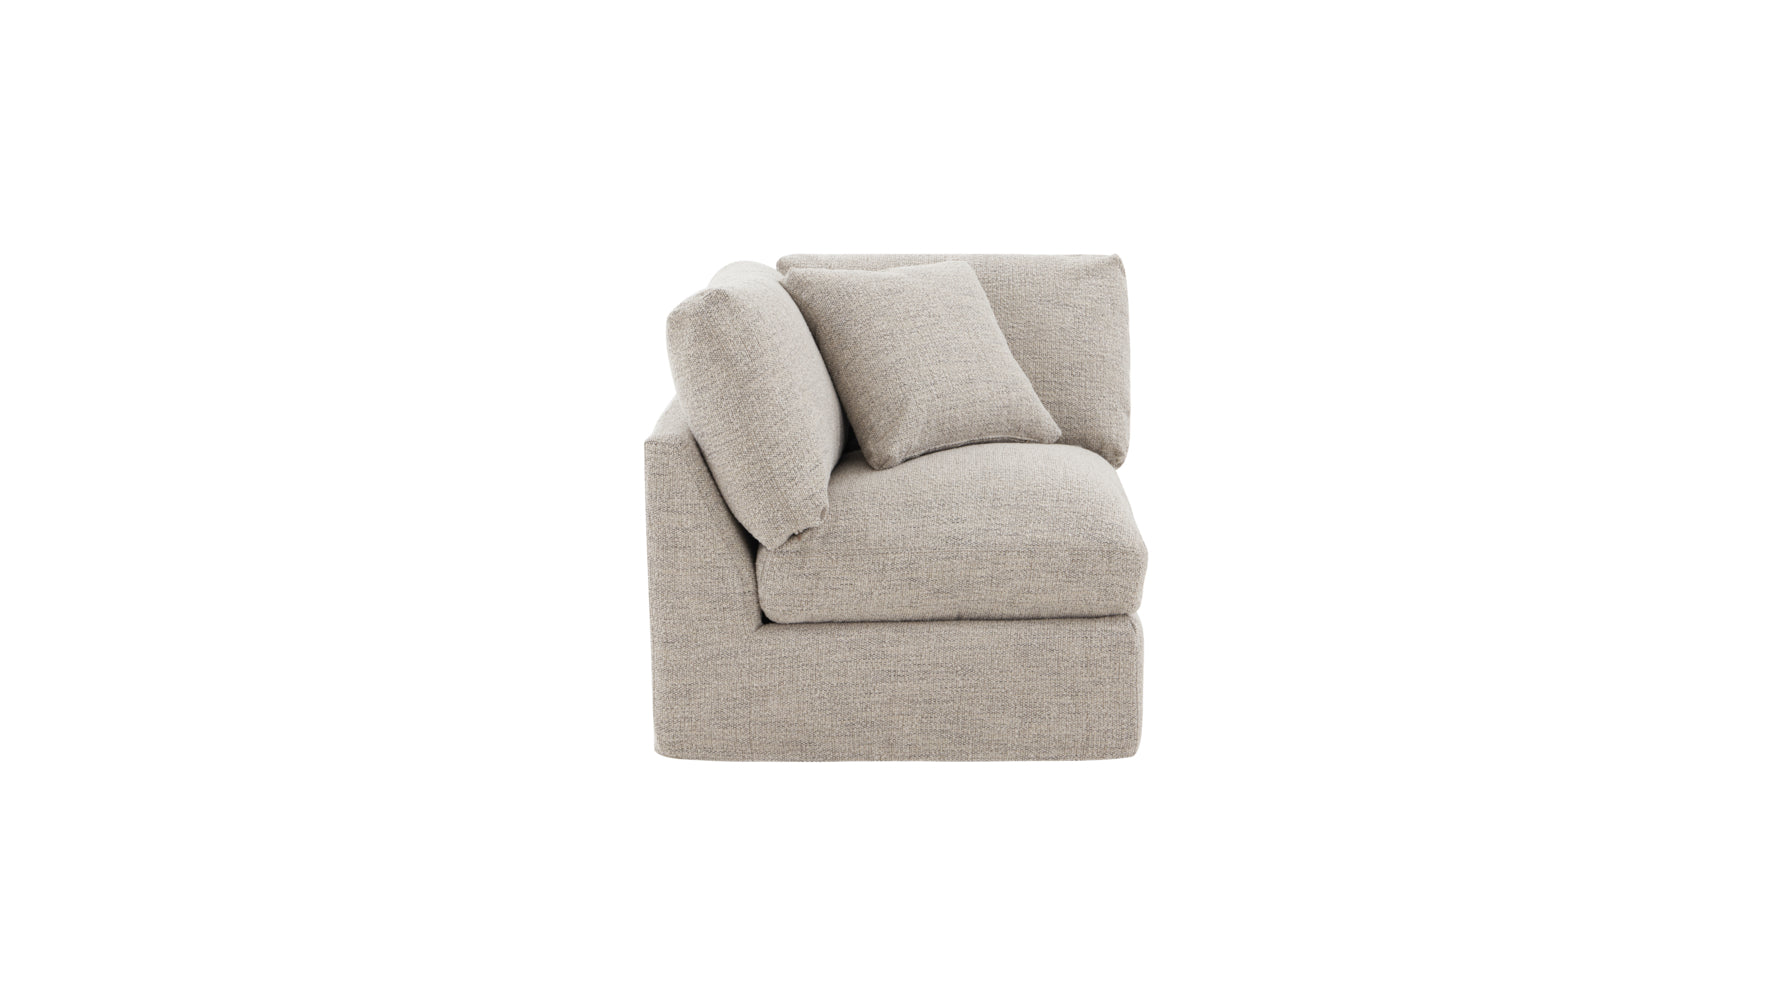 Get Together™ Corner Chair, Standard, Oatmeal - Image 6